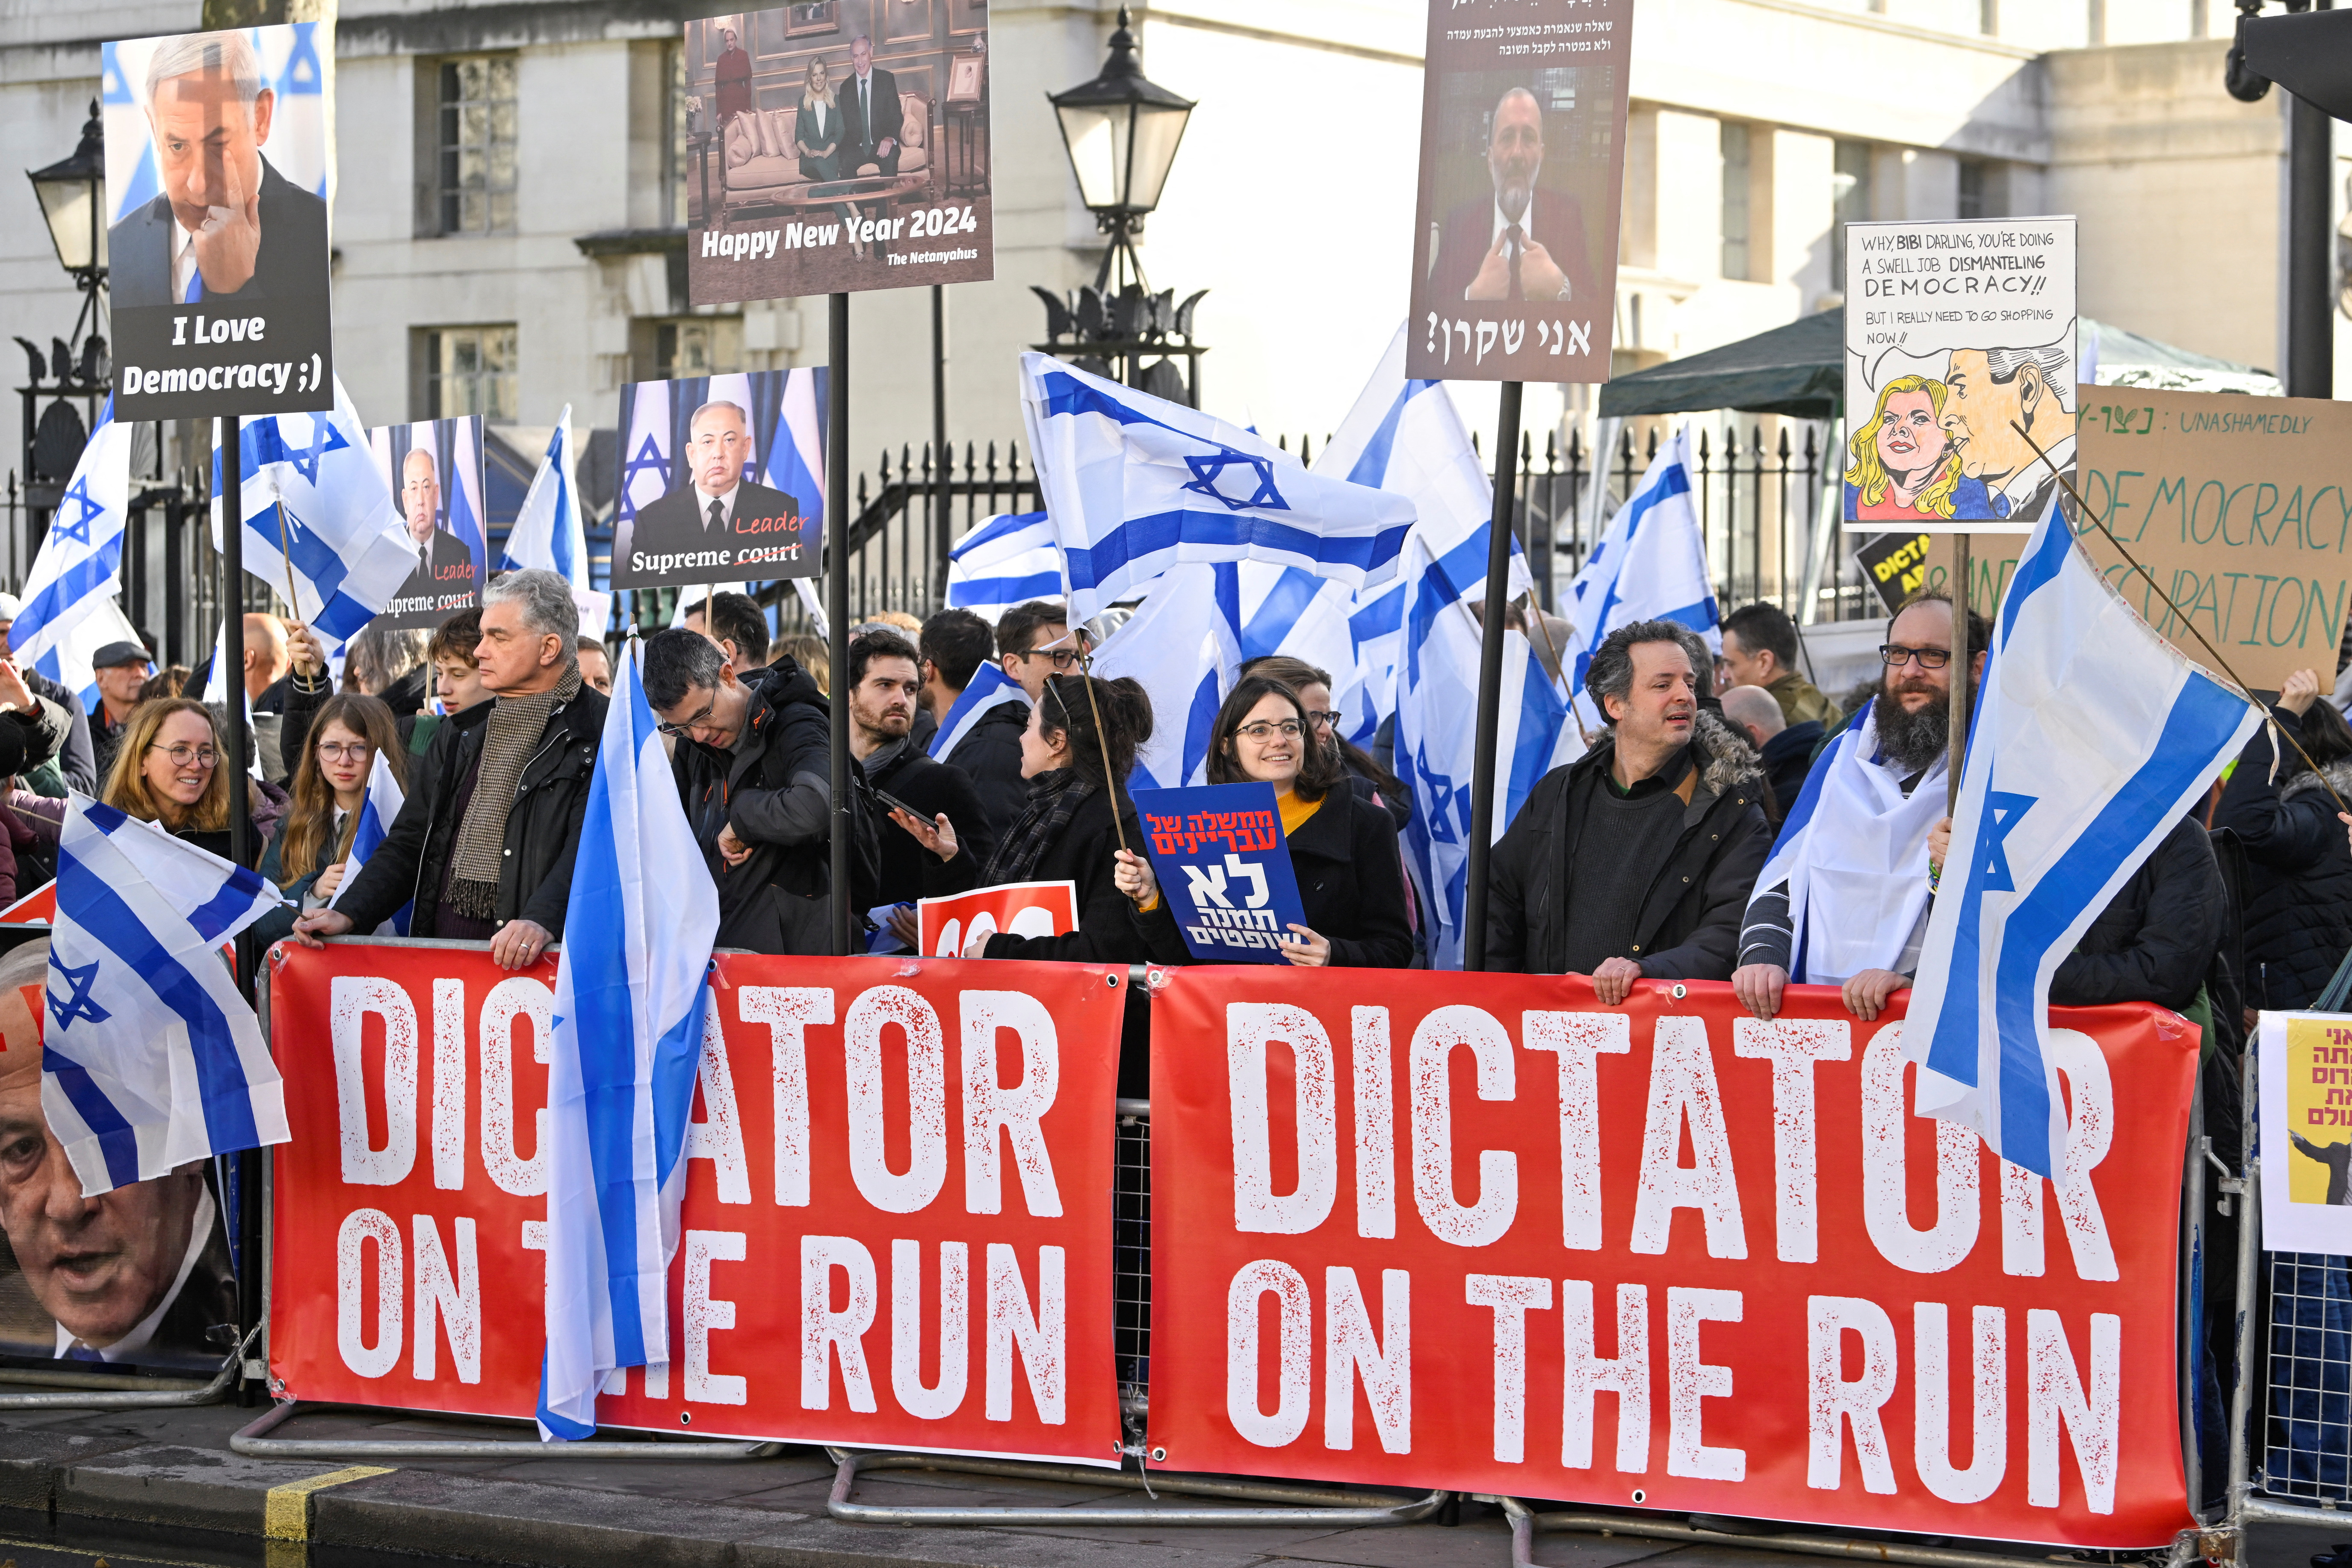 Demonstrators protest against Israeli Prime Minister Benjamin Netanyahu during his visit to Britain